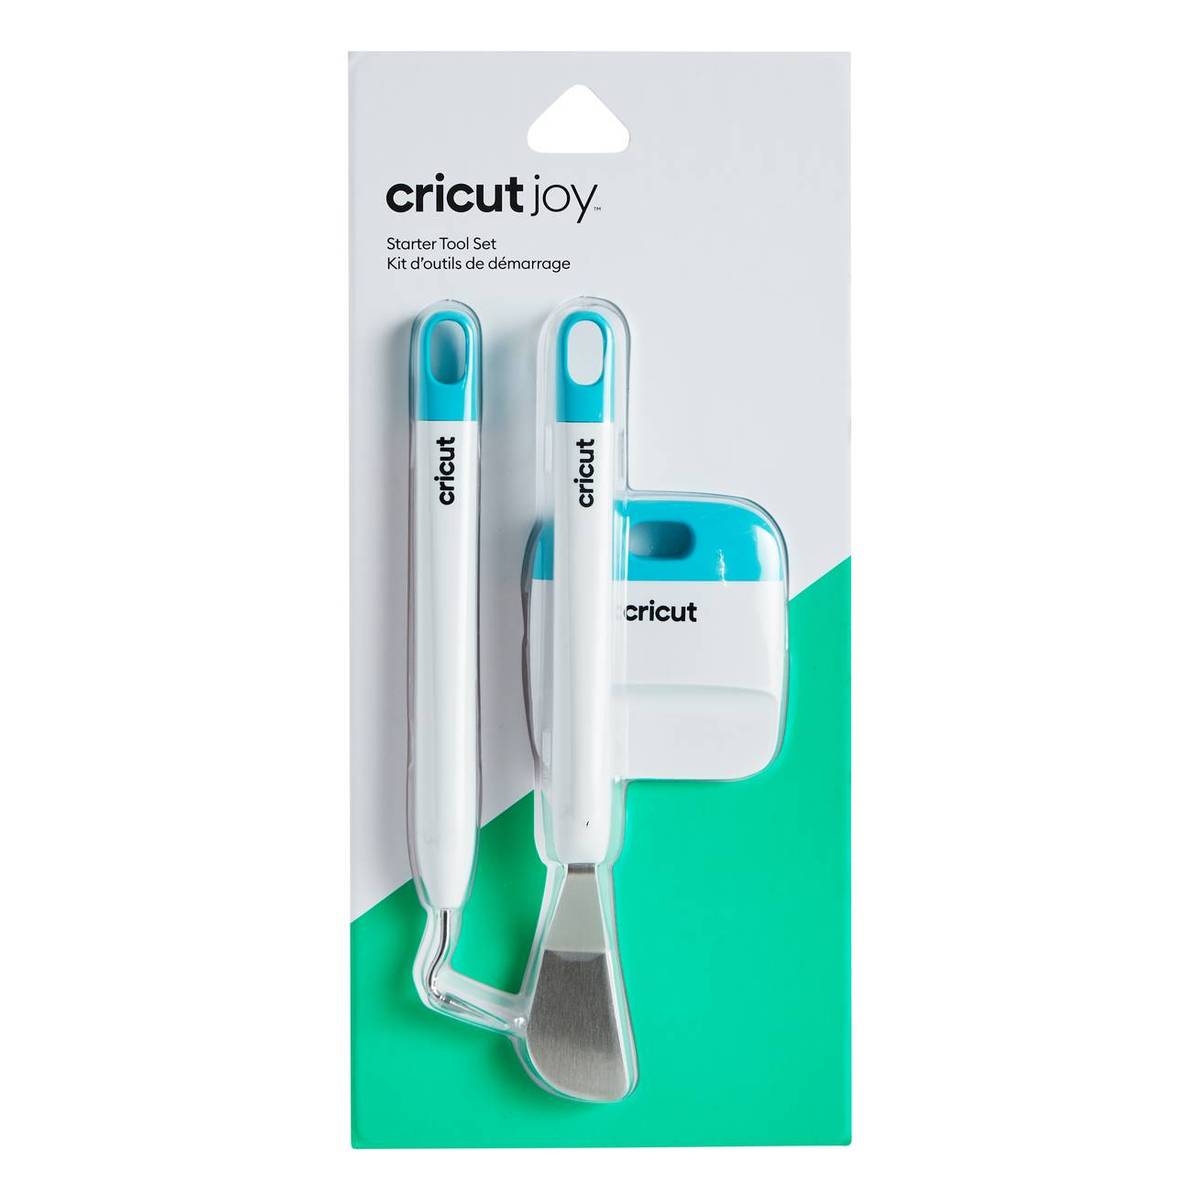 Cricut Joy Digital Cutting Machine & Starter Tool Set Bundle